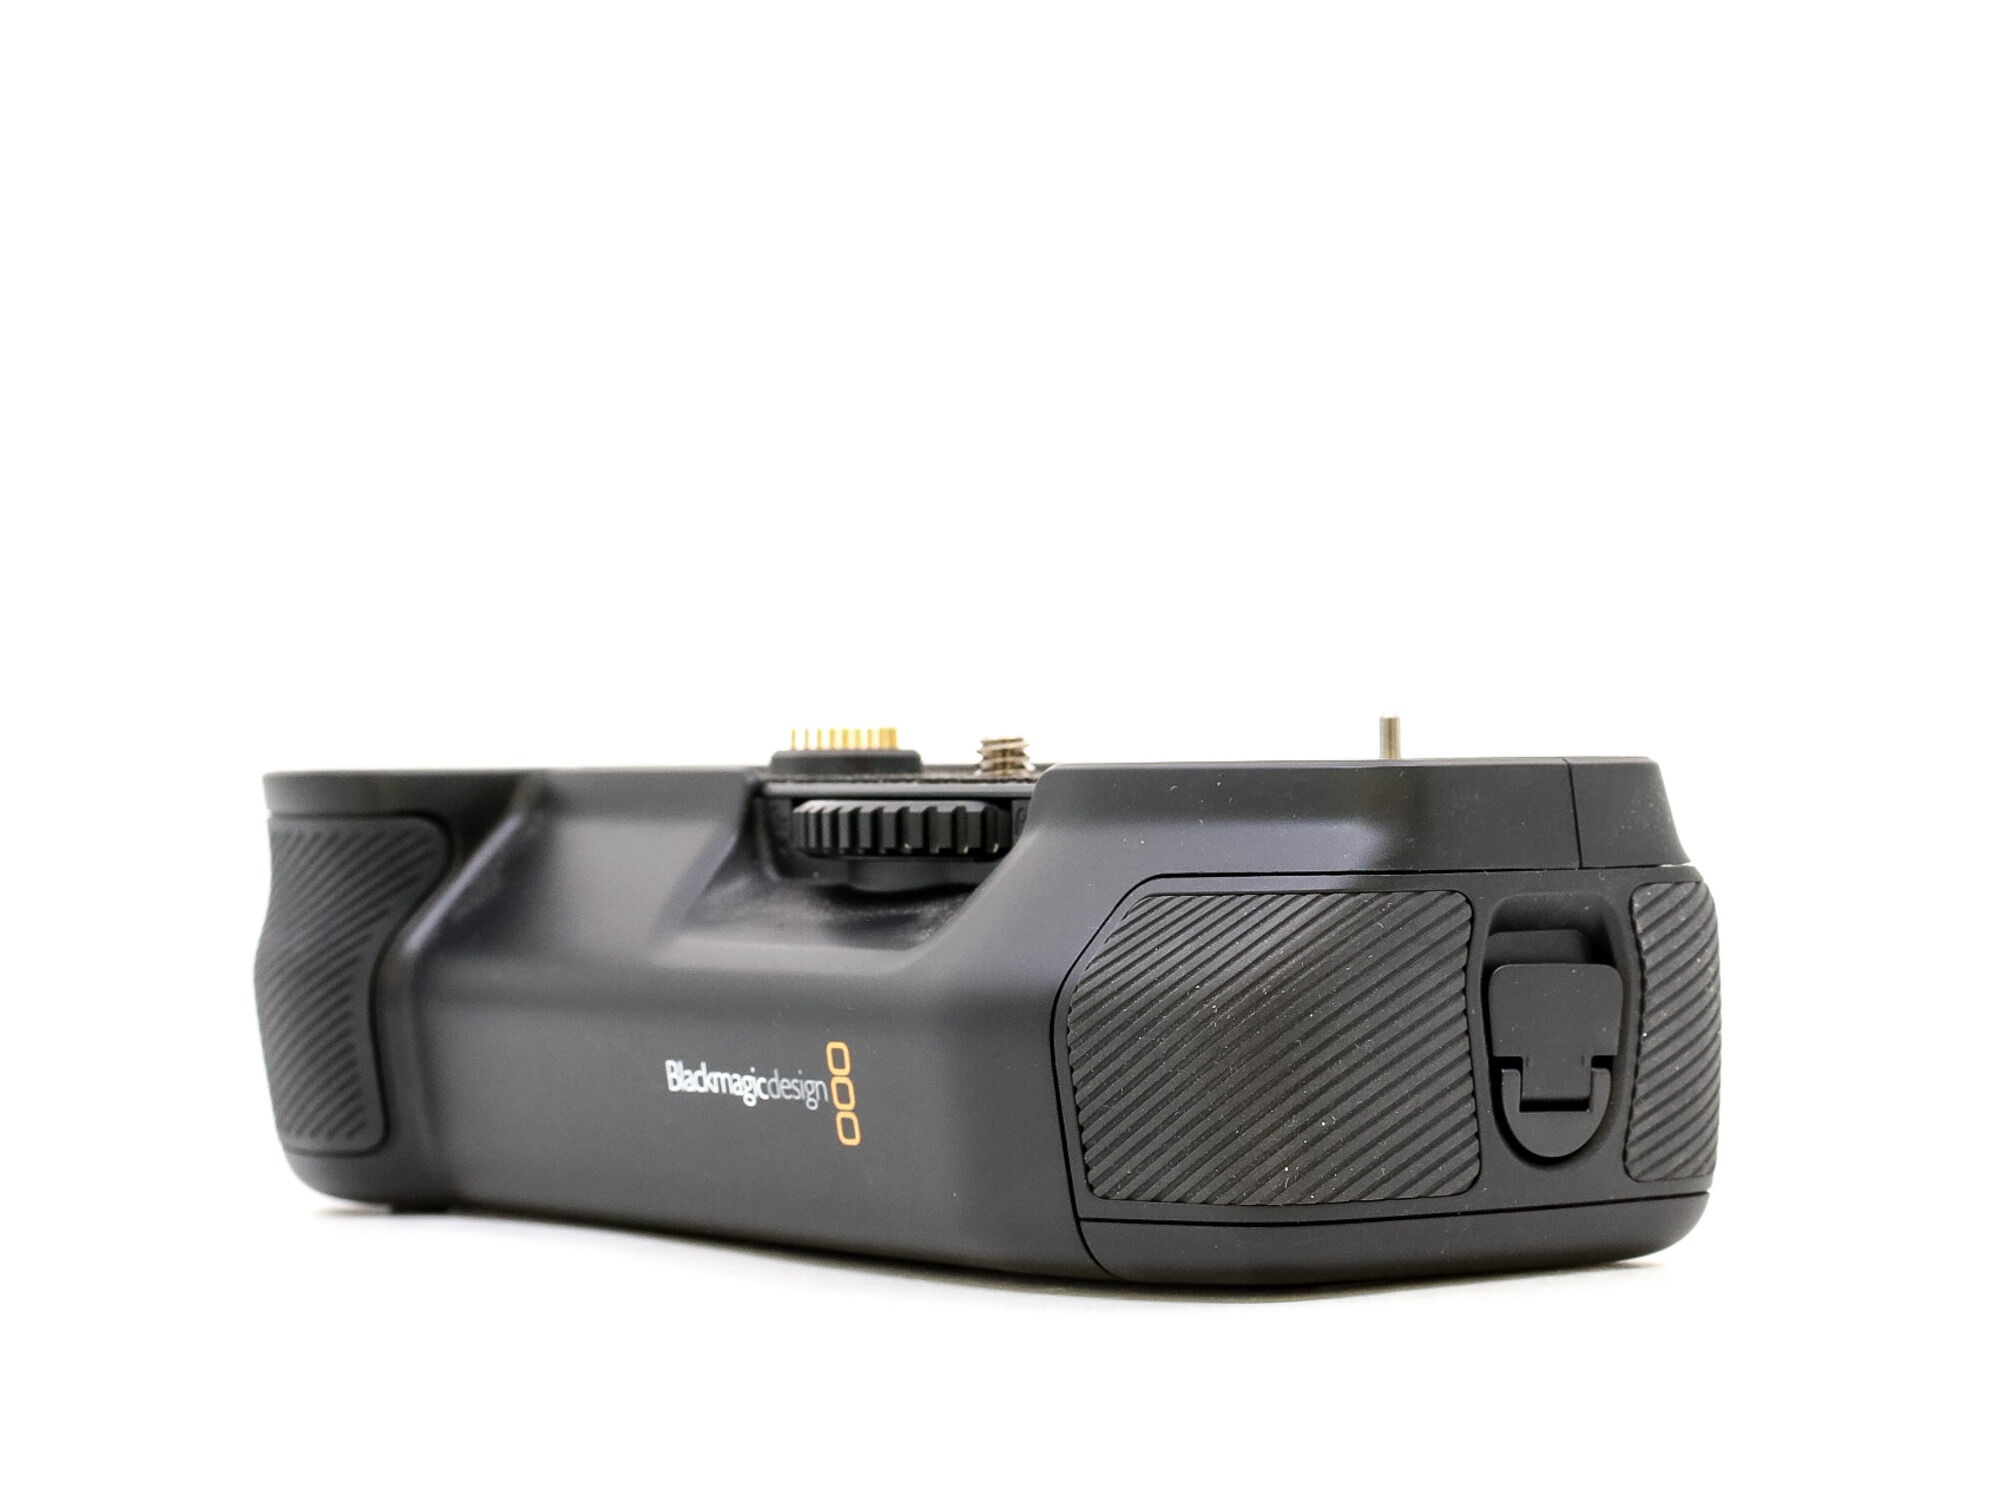 blackmagic design pocket cinema camera 6k pro battery grip (condition: excellent)